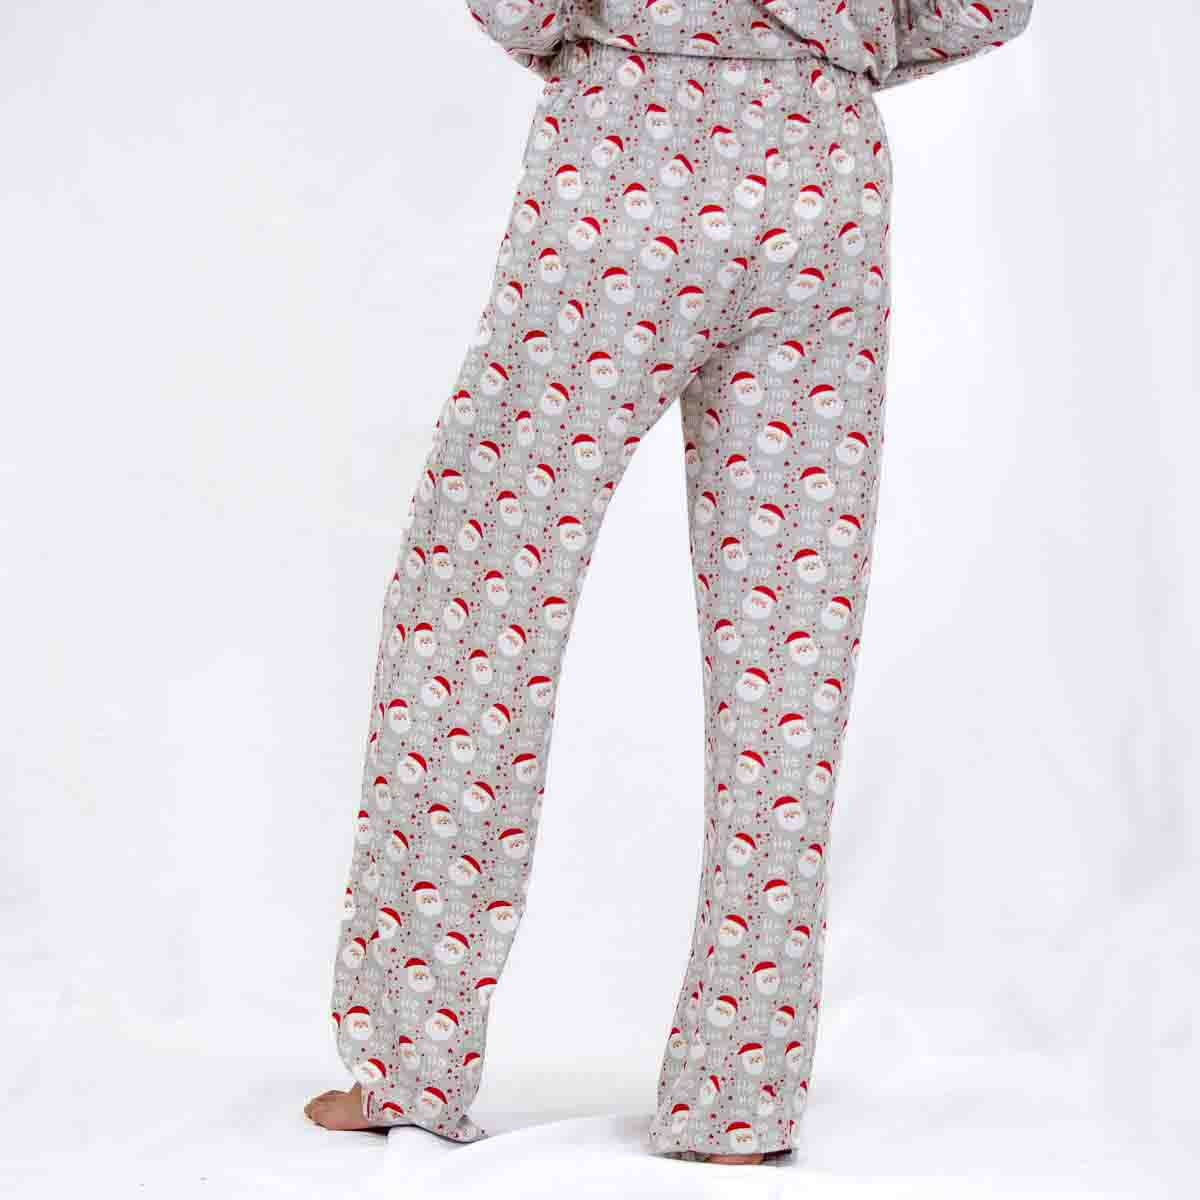 Cheerful Santa Sleep Pants Light Gray/True Red